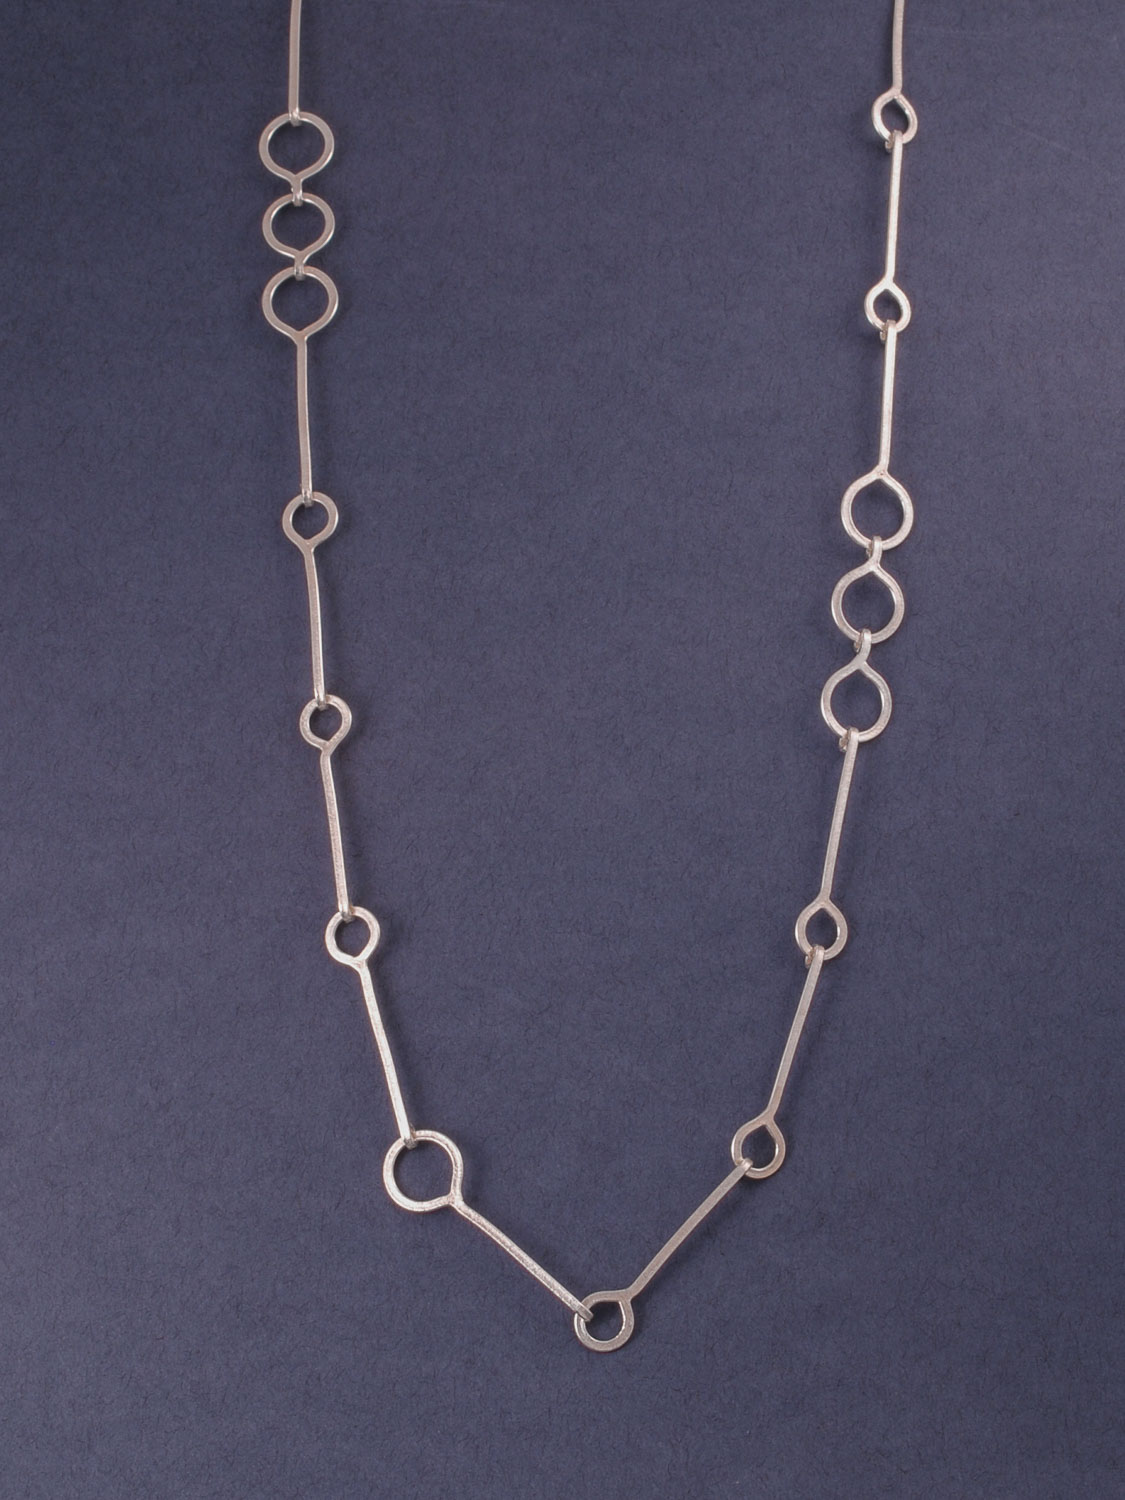 stem link chain